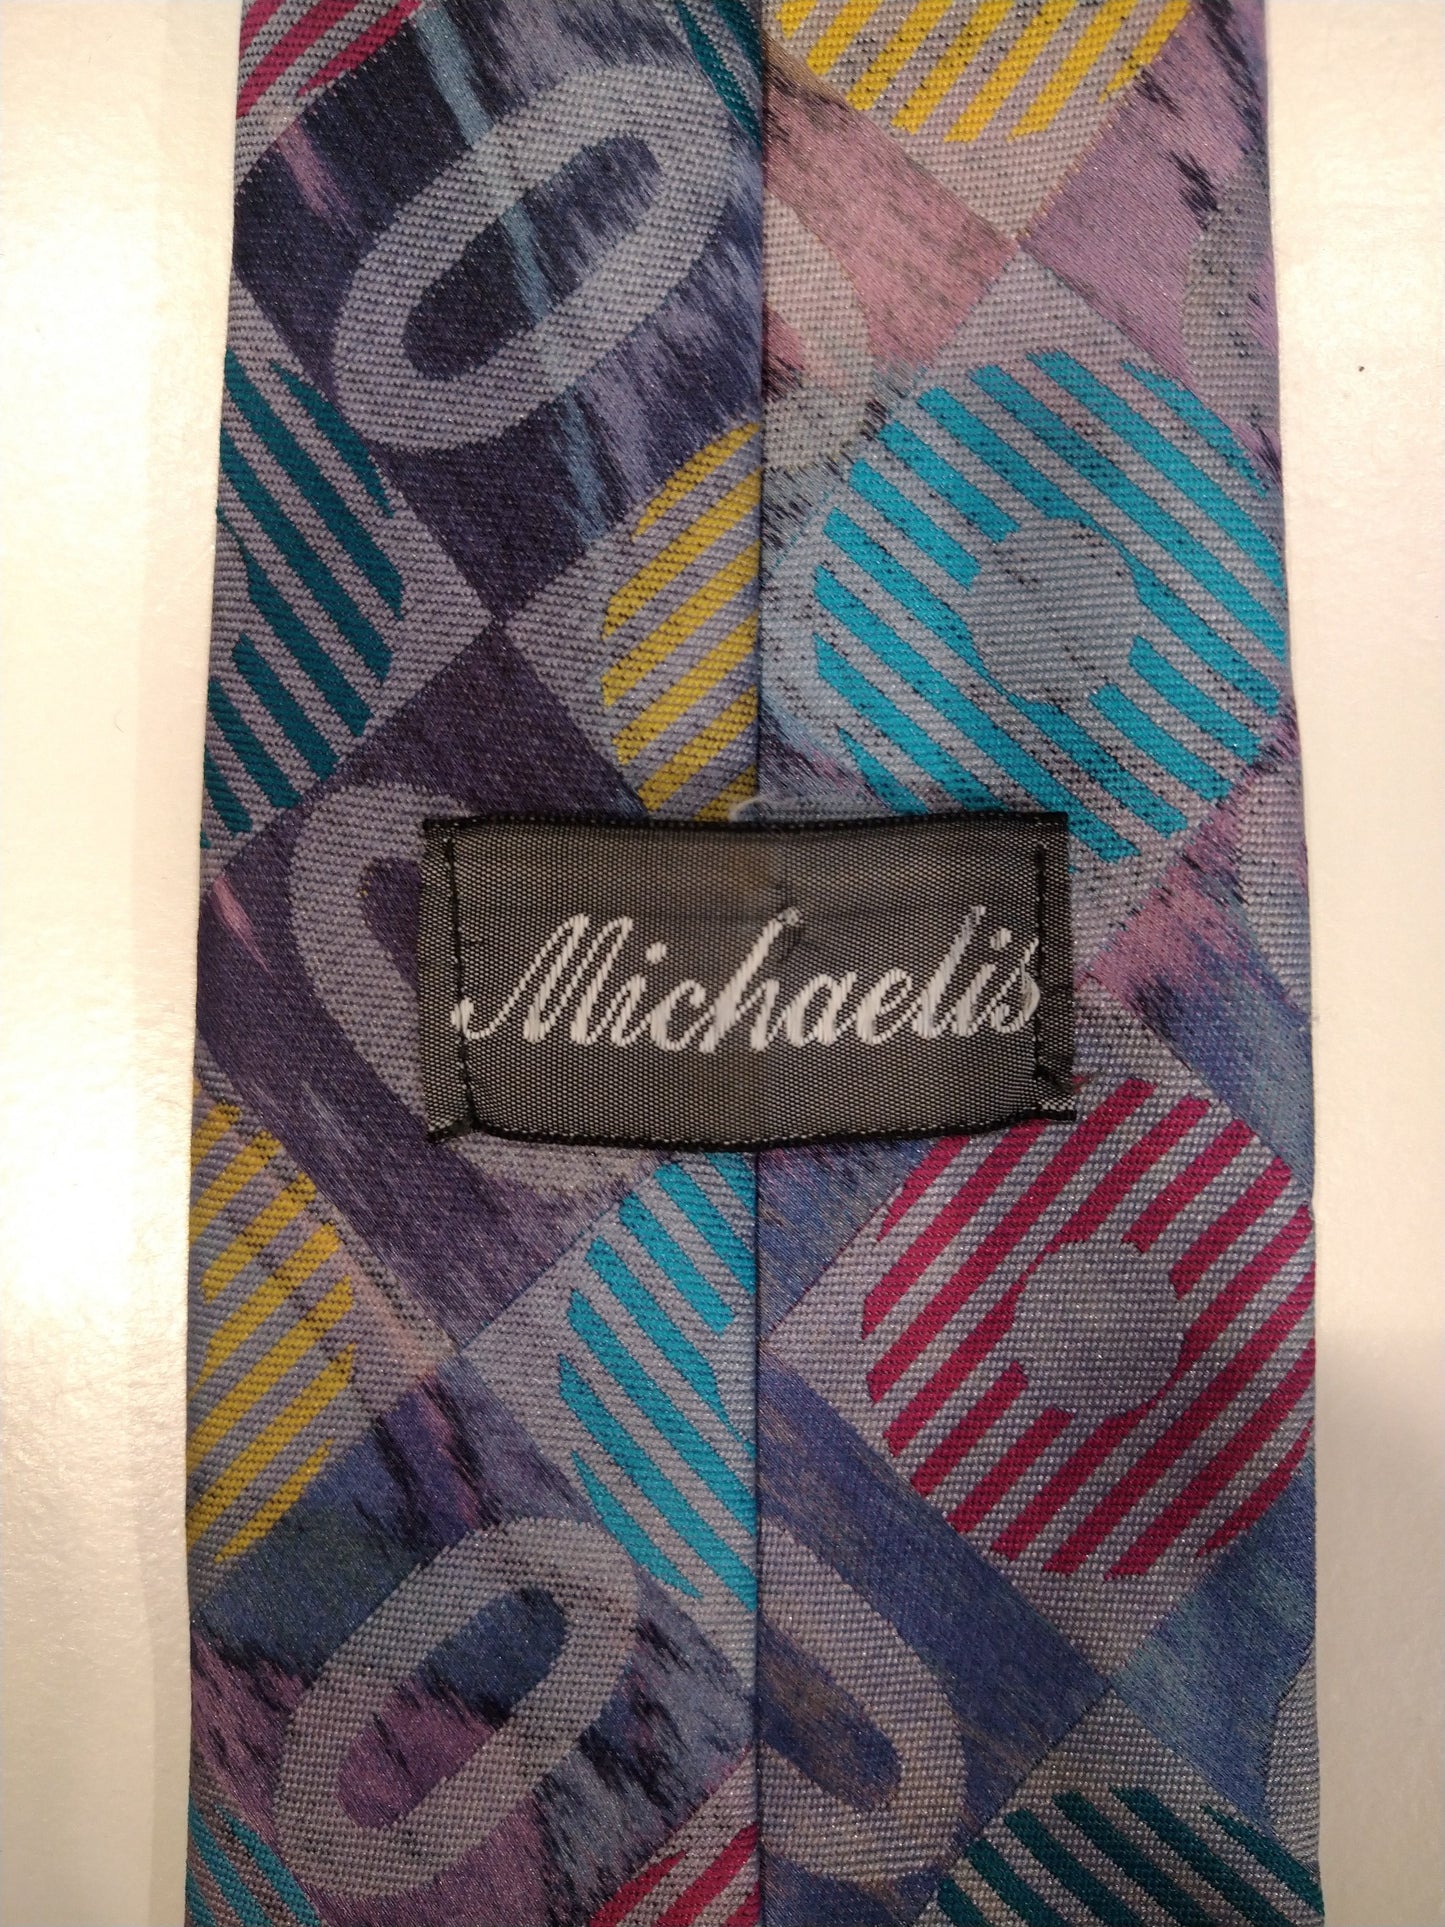 Cravatta in poliestere di Michaelis vintage. Bel motivo vintage.